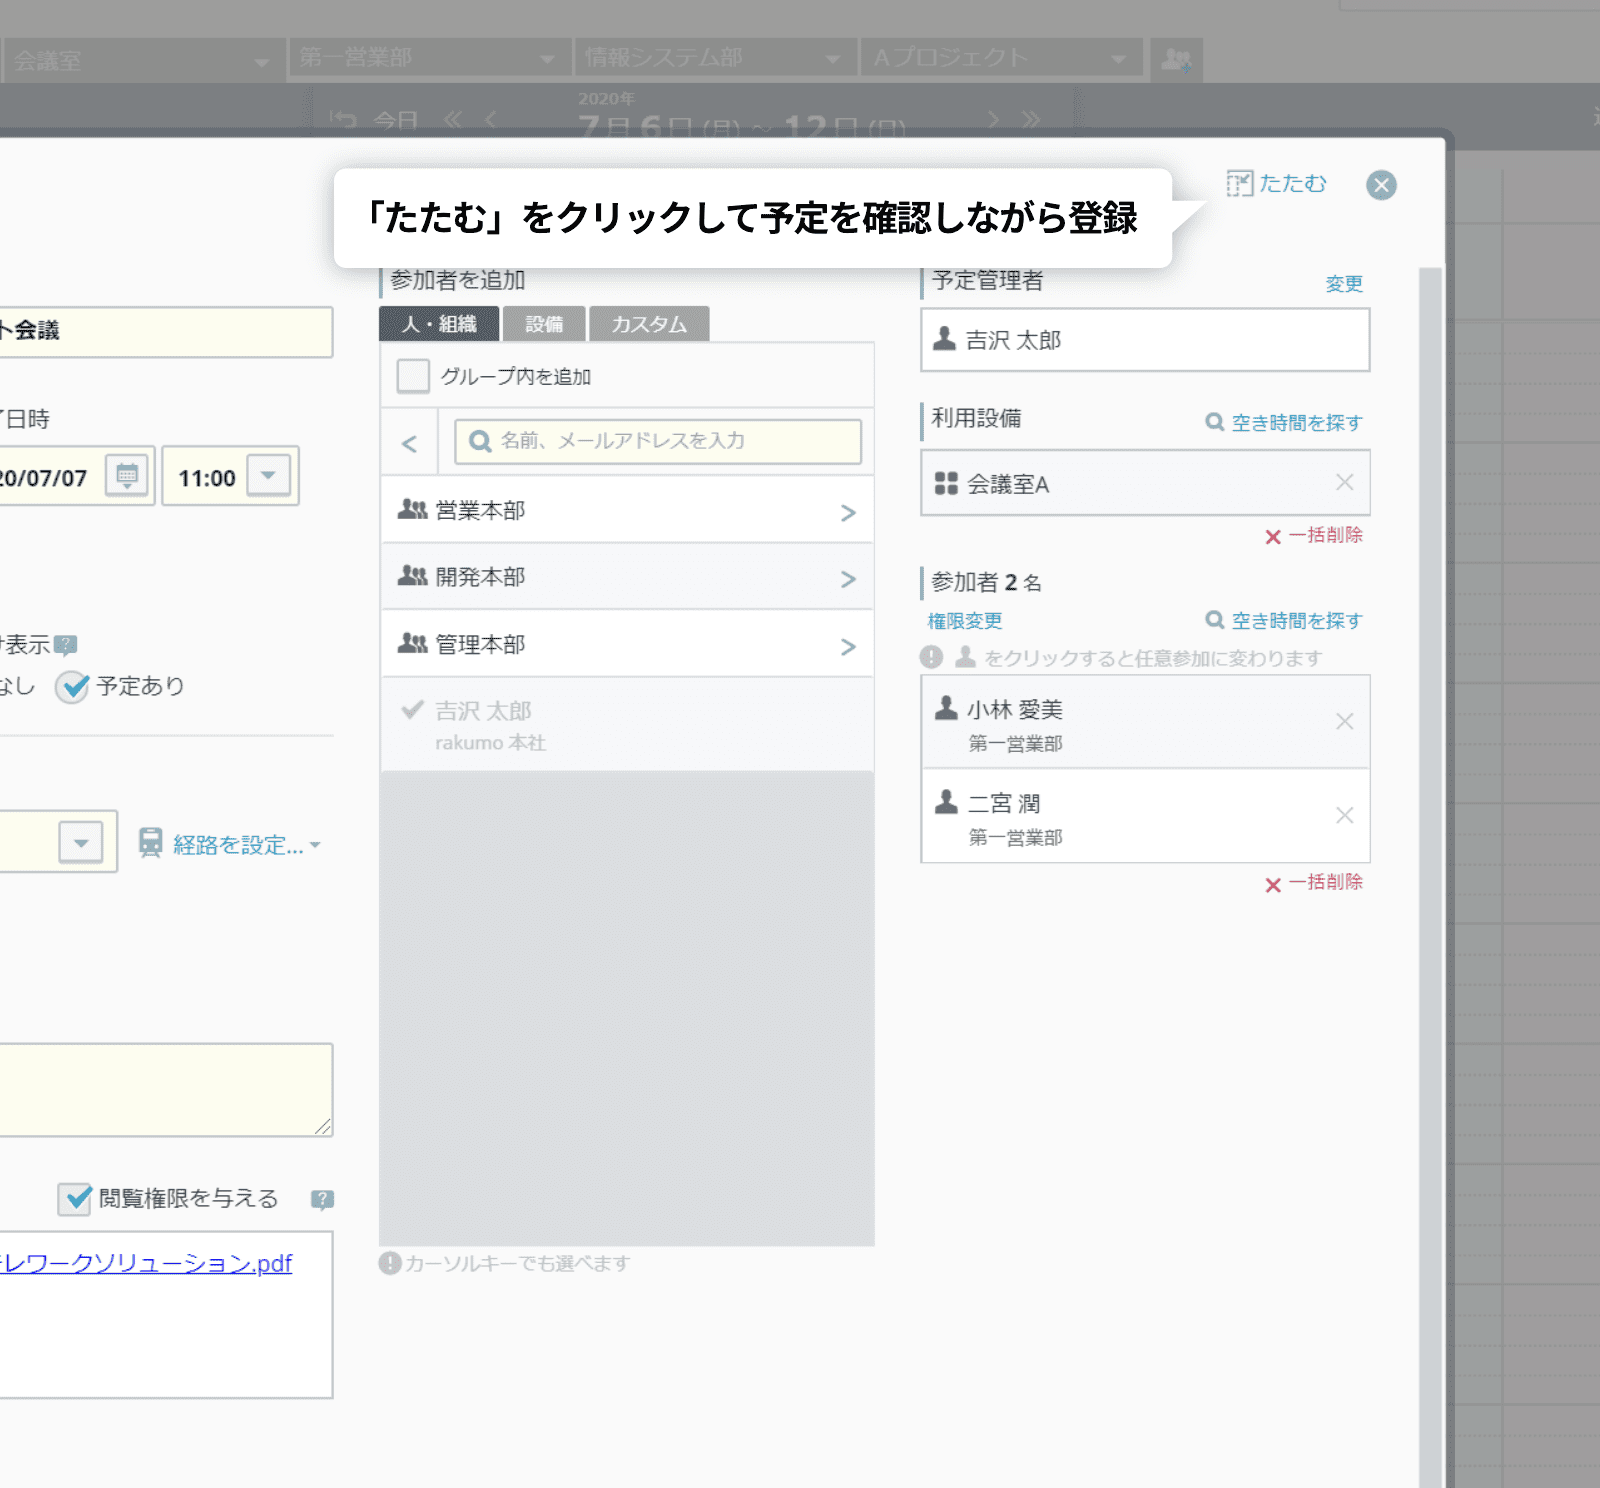 rakumo カレンダー 画面中央表示での予定登録